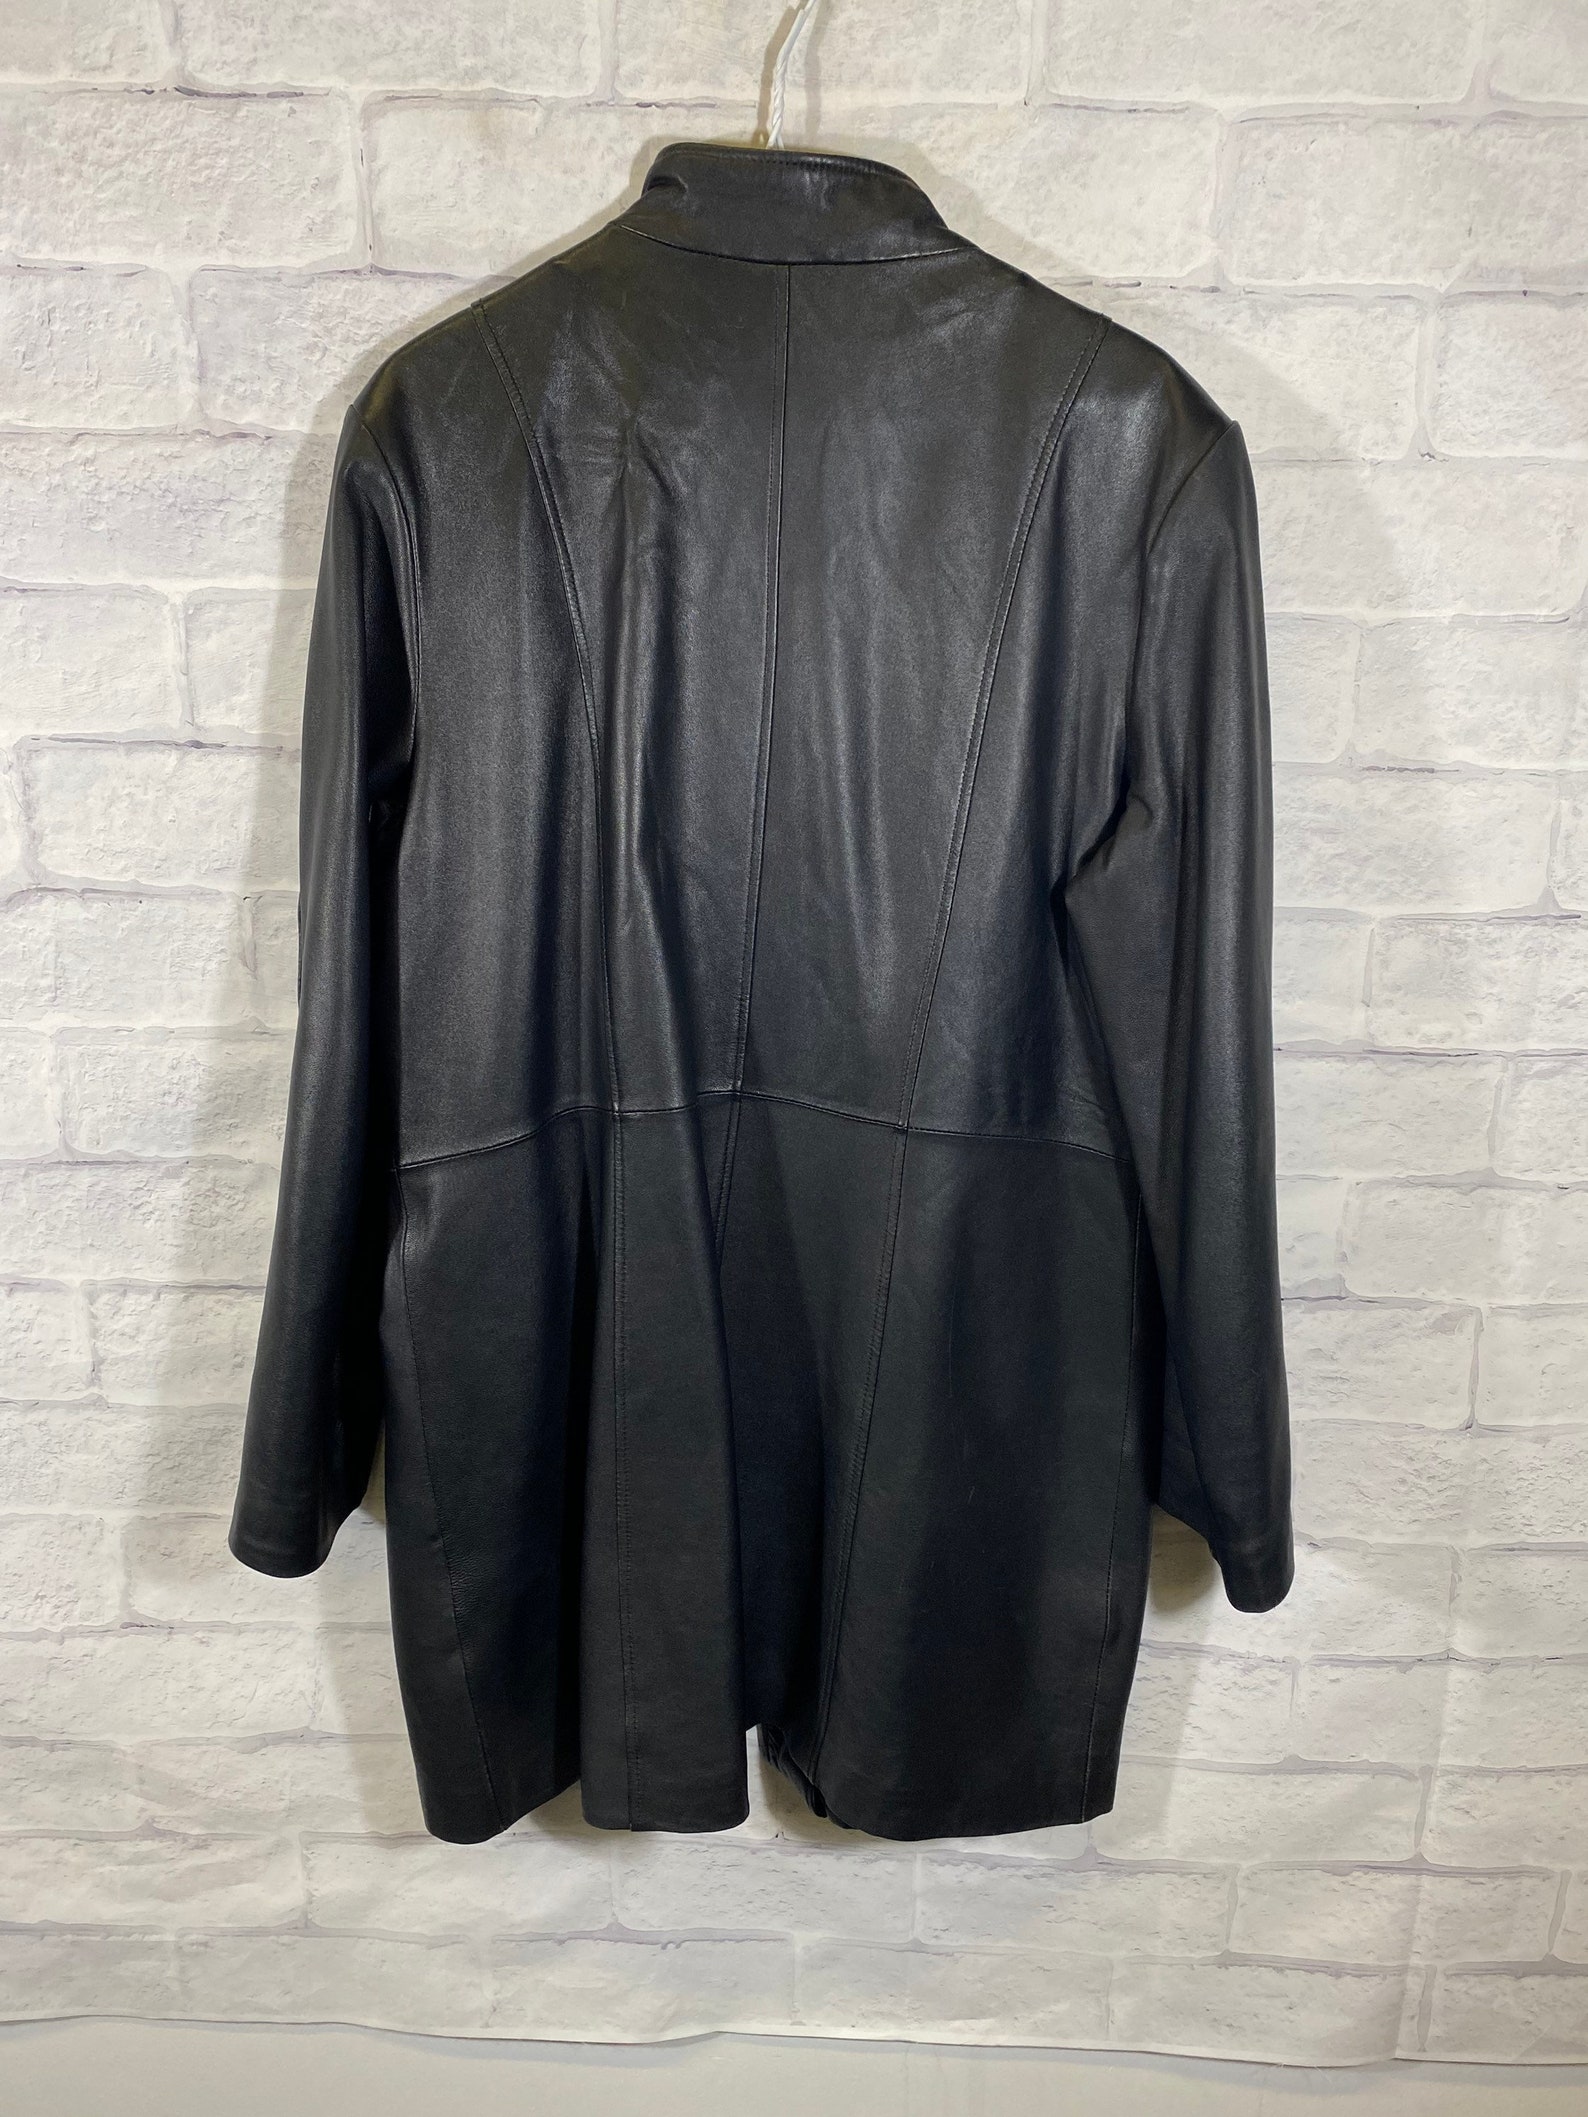 Danier Y2K fullzip trench coat leather jacket | Etsy